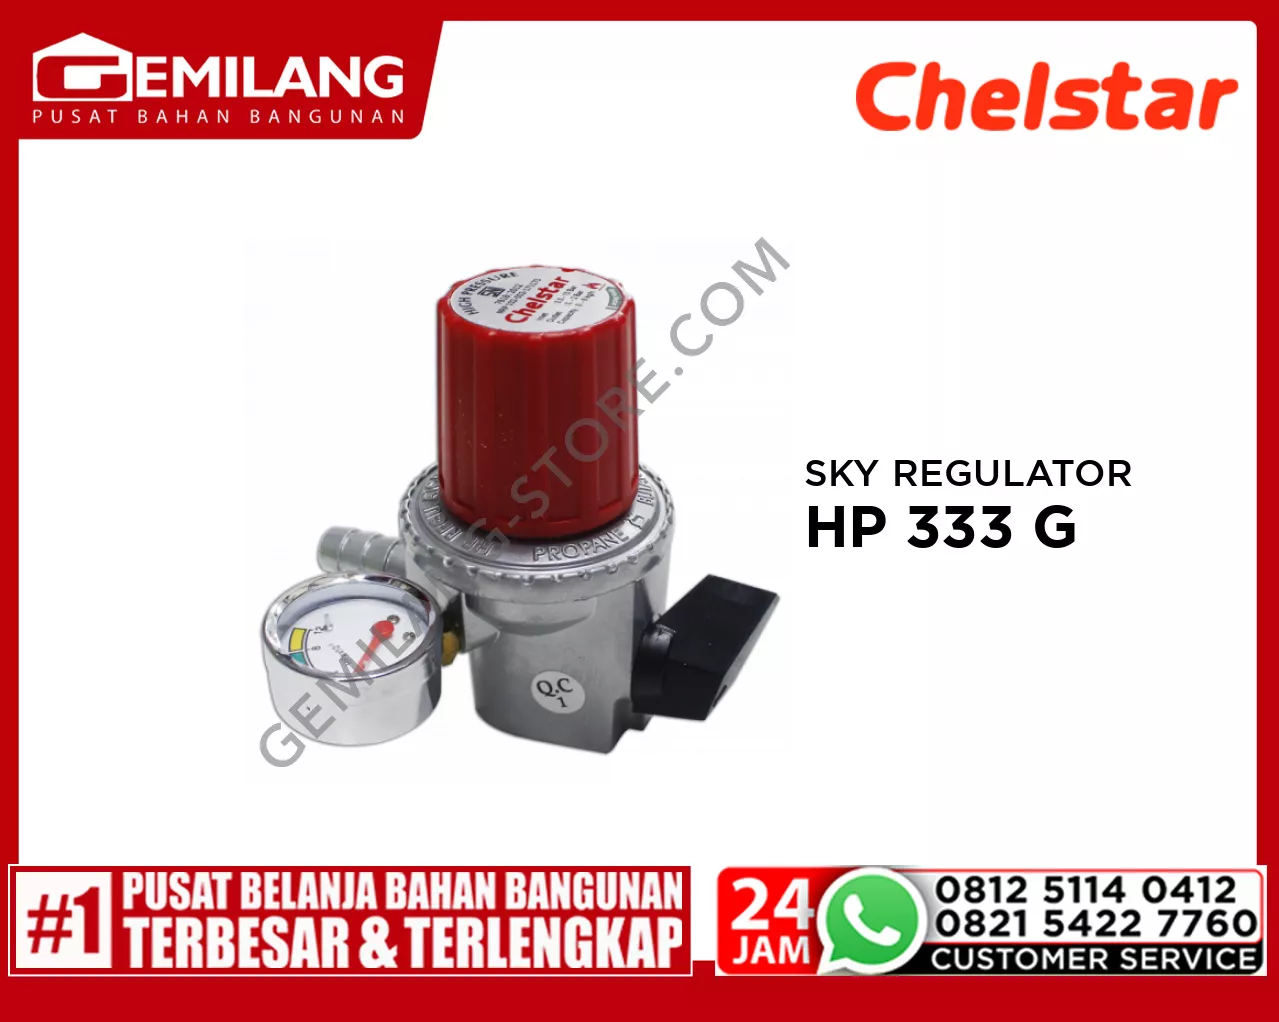 CHELSTAR SKY REGULATOR HP 333 G + METER